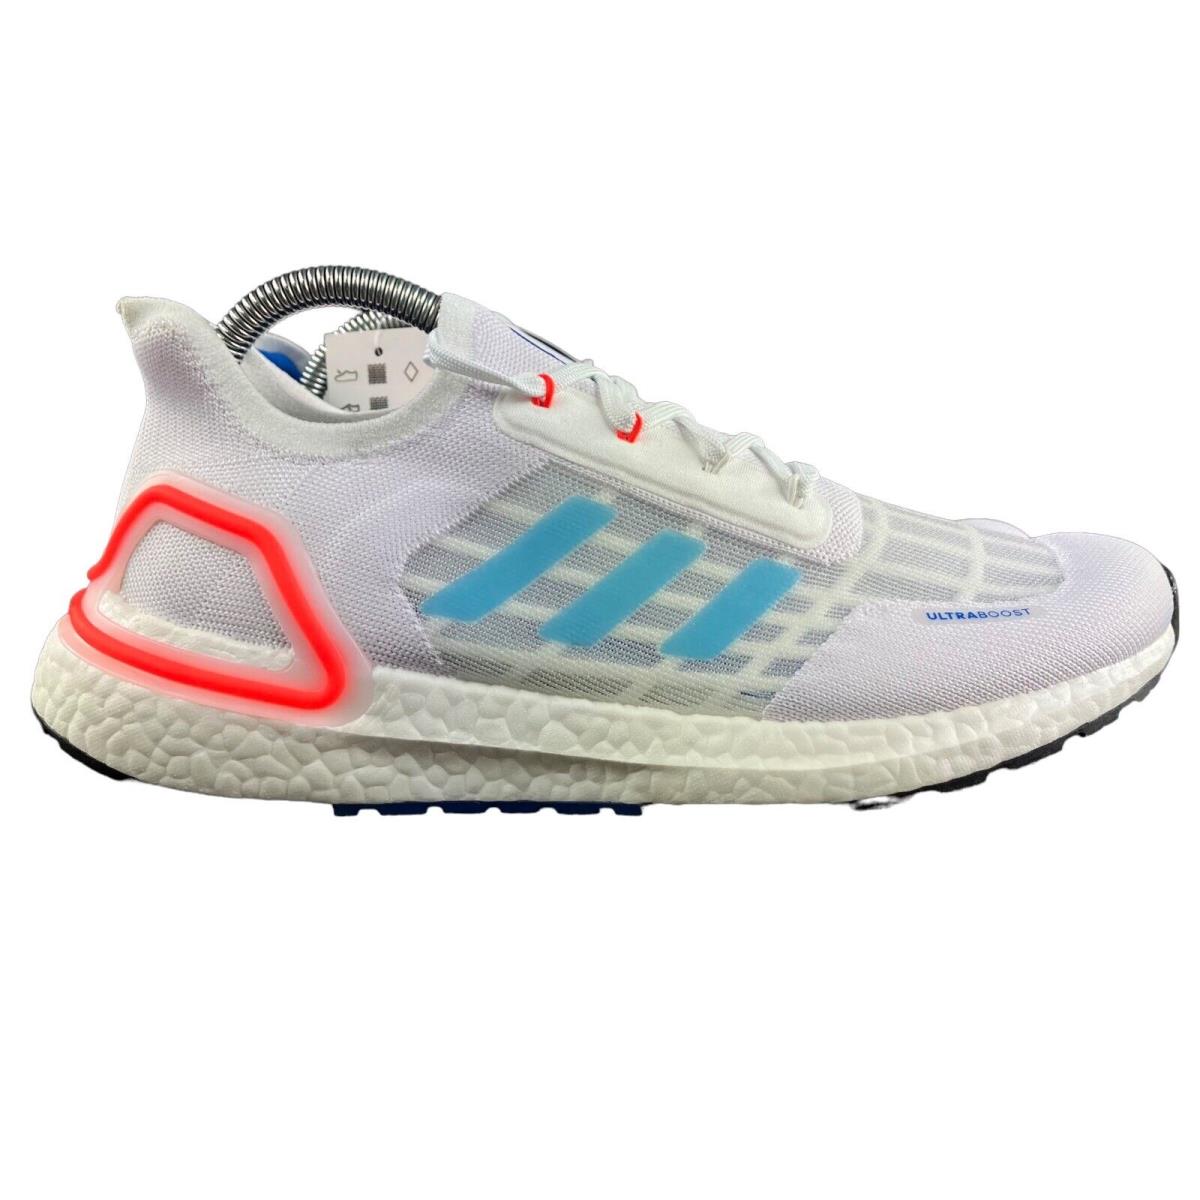 Adidas Men`s Ultraboost S.rdy White Blue Orange Running Shoes FY3470 Sz 8 - 9.5